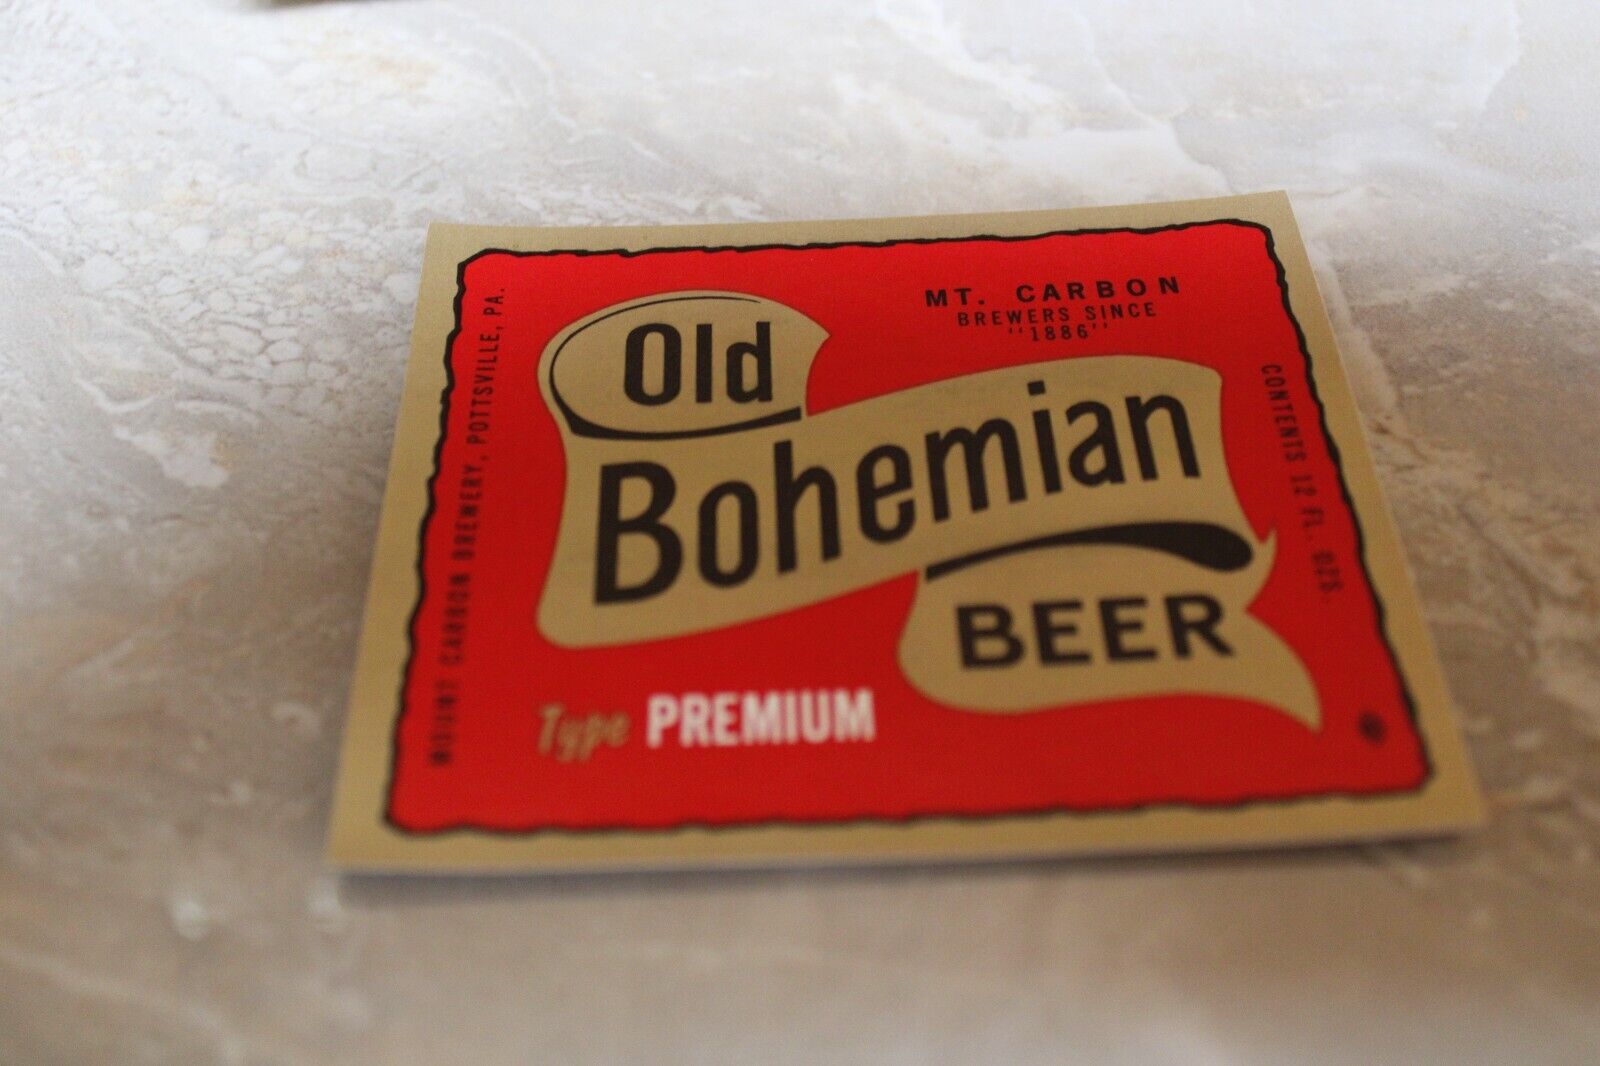 25 Vintage Old Bohemian Beer Labels Mount Carbon Brewing Pottsville, PA